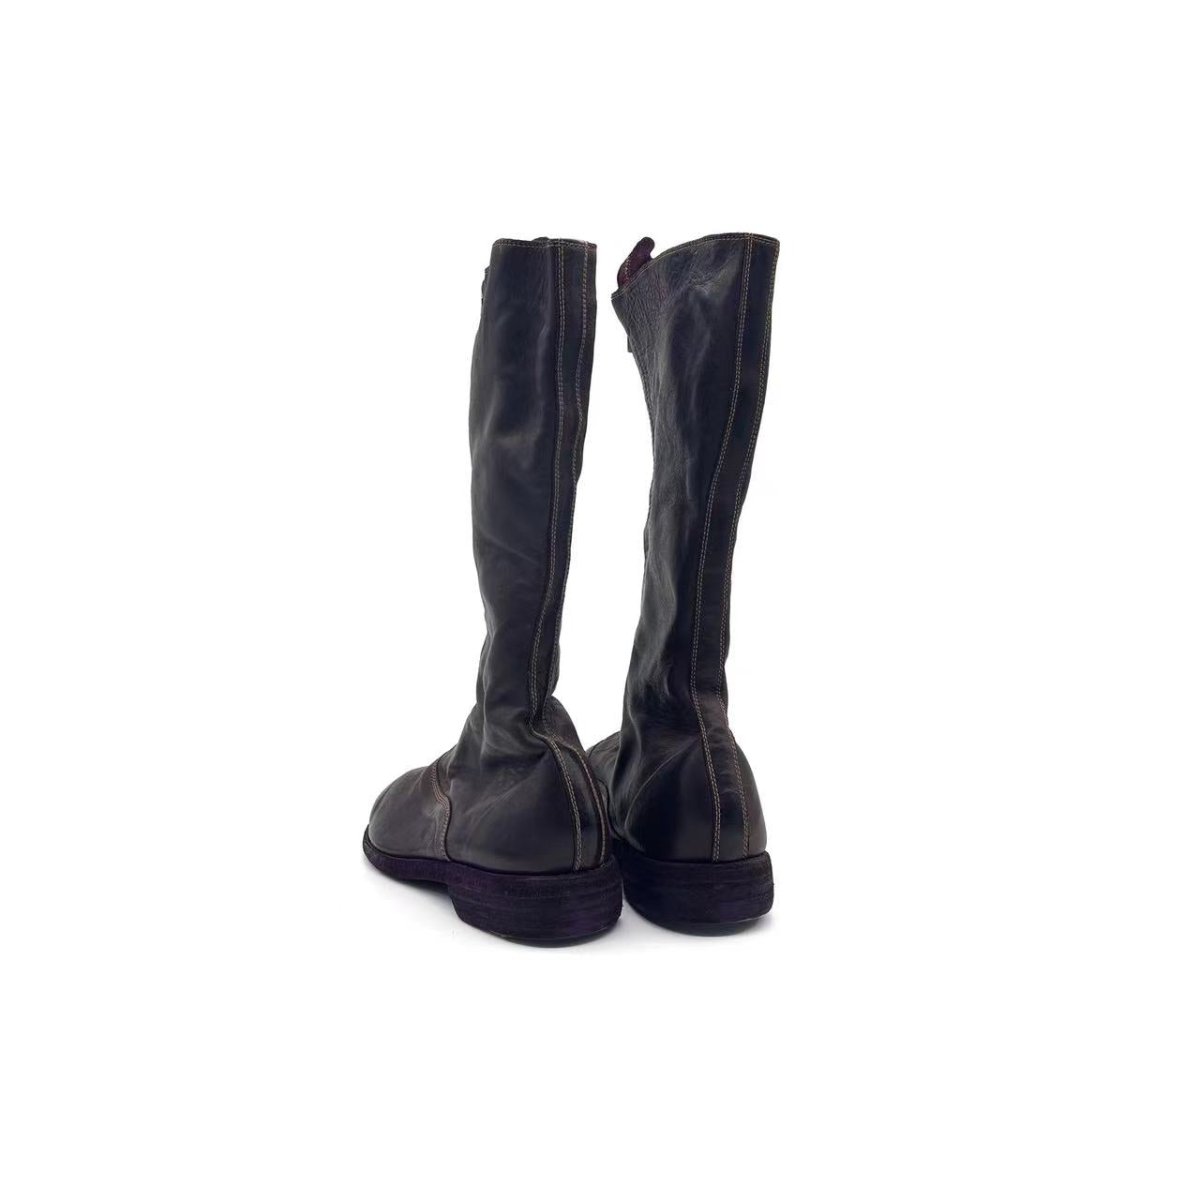 GUIDI 410 Dark Brown Soft Horse Grain Front Zip Women's Leather Boots - SHENGLI ROAD MARKET